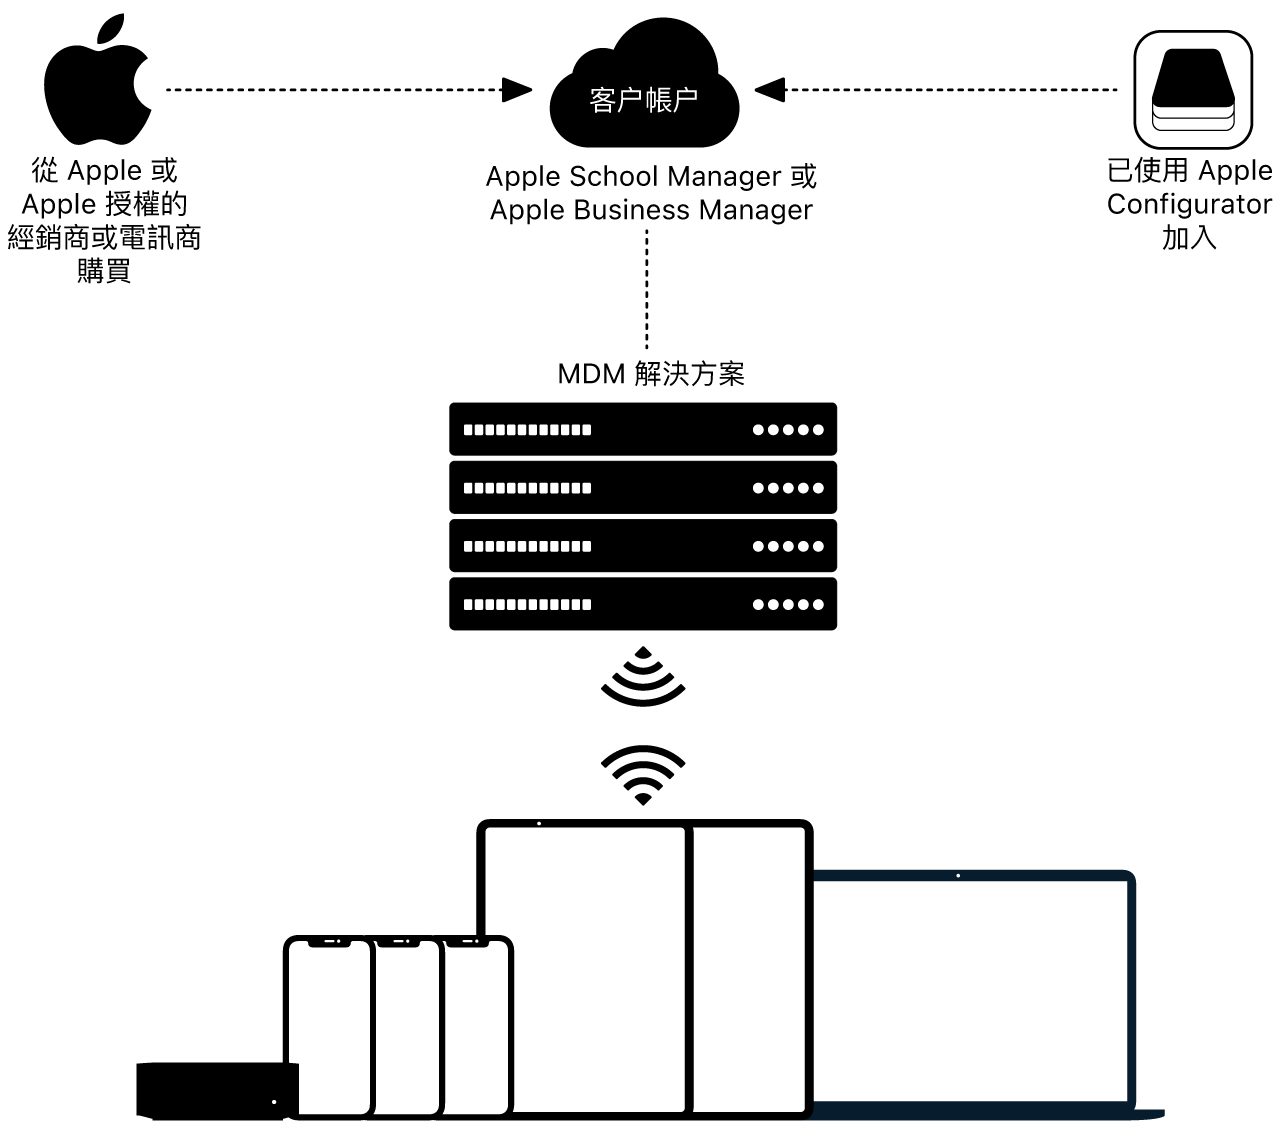 圖表顯示將裝置分派到 Apple School Manager 或 Apple Business Manager 的方式。